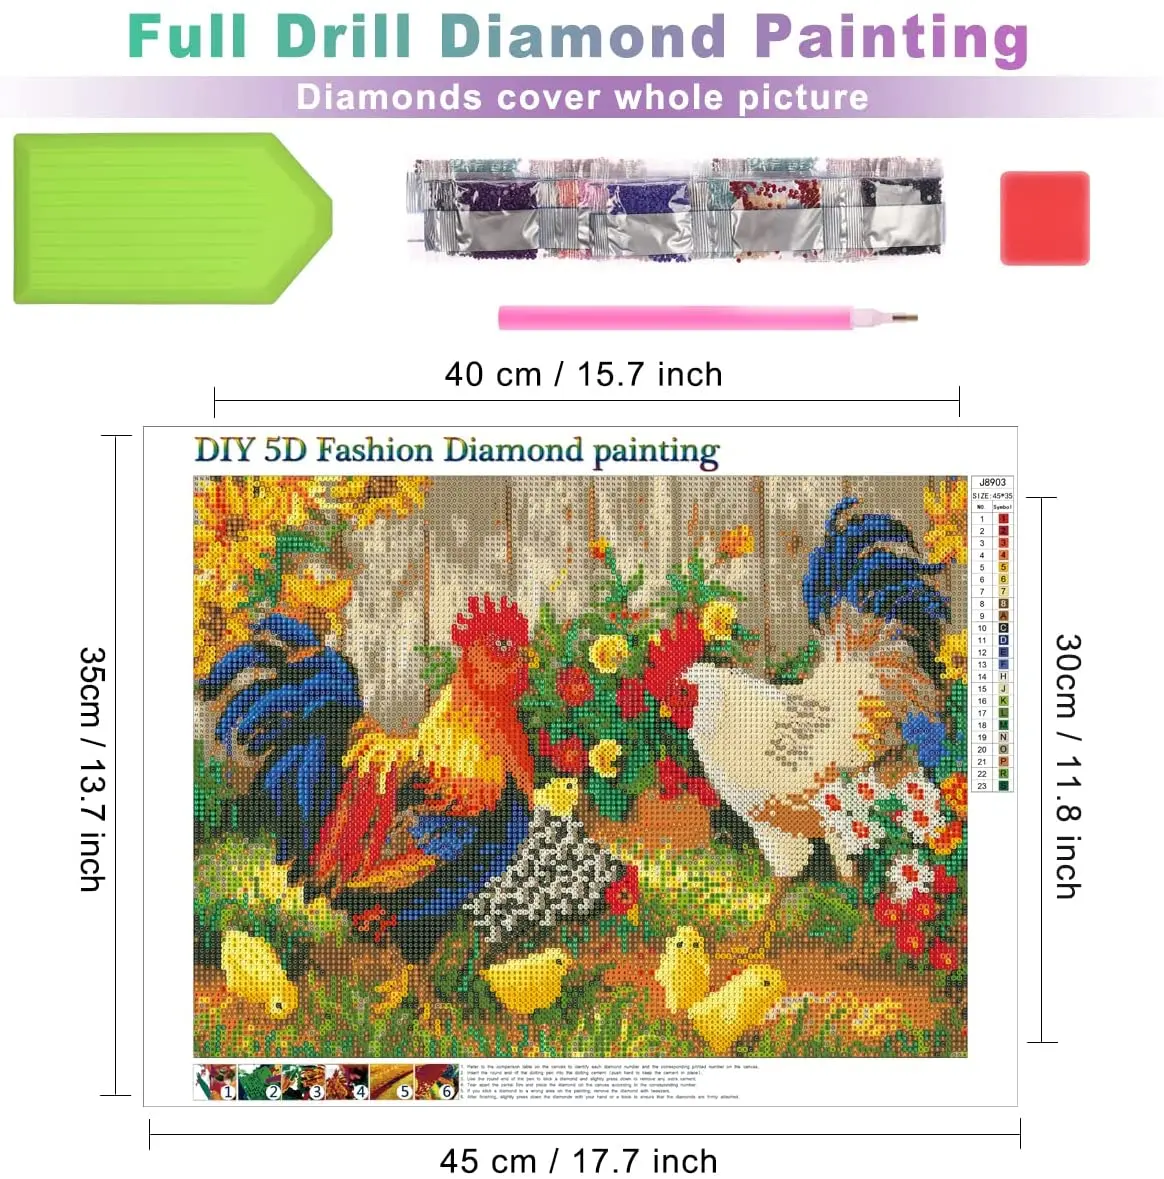 Diy 5d Diamond Painting Kits For Adults, Round Full Drill Diamond